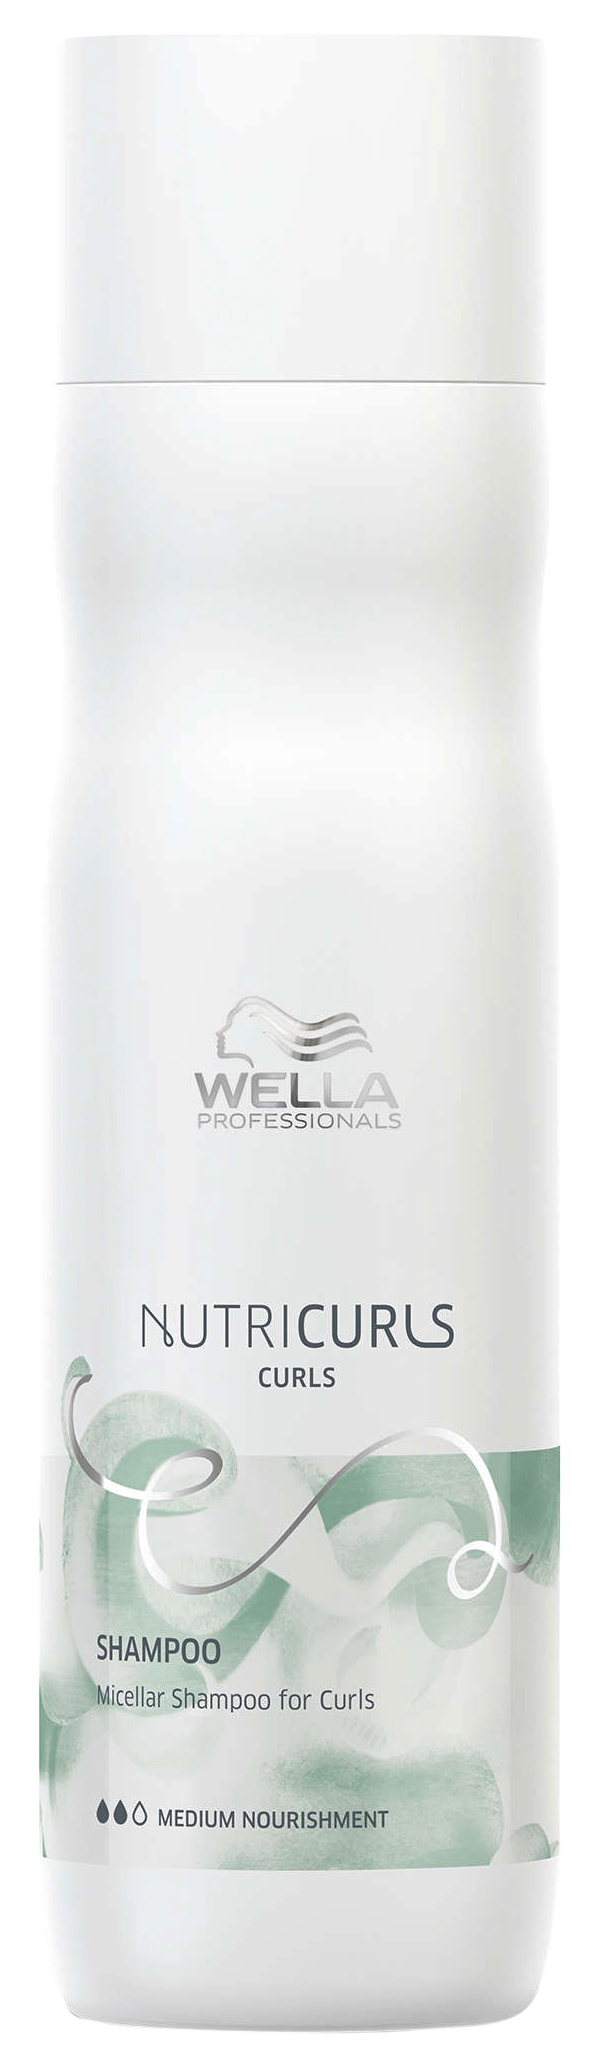 Шампунь WELLA PROFESSIONALS CURLS 250 мл шампунь wella professionals elements renewing shampoo 250 мл